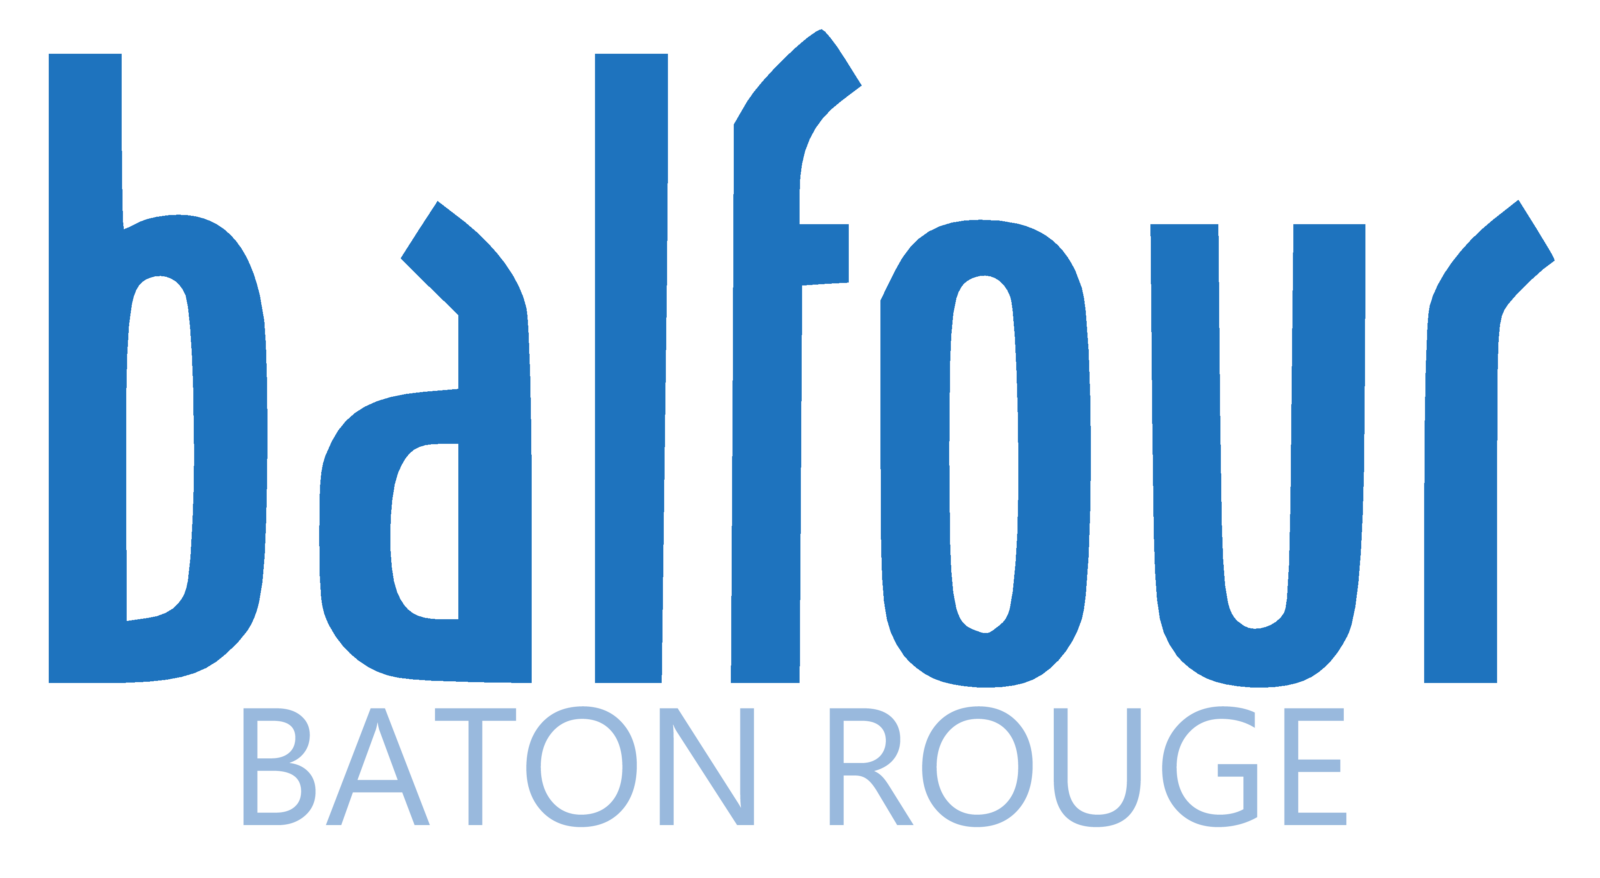 Balfour Baton Rouge